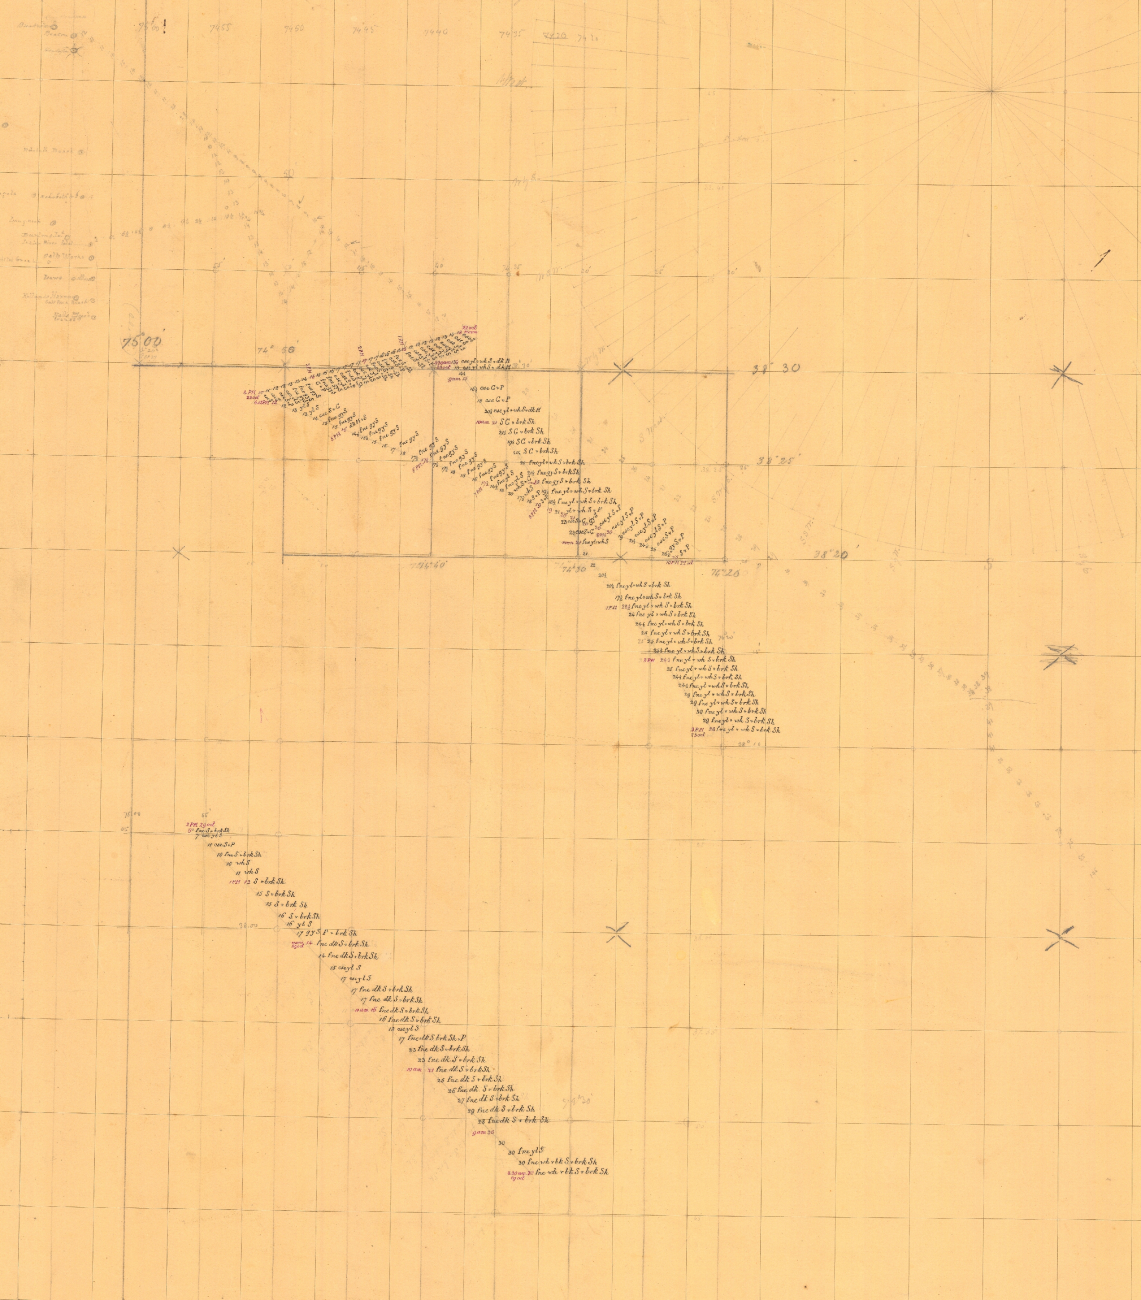 Field map of line of soundings offshore from Cape Henlopen, Delaware Bay